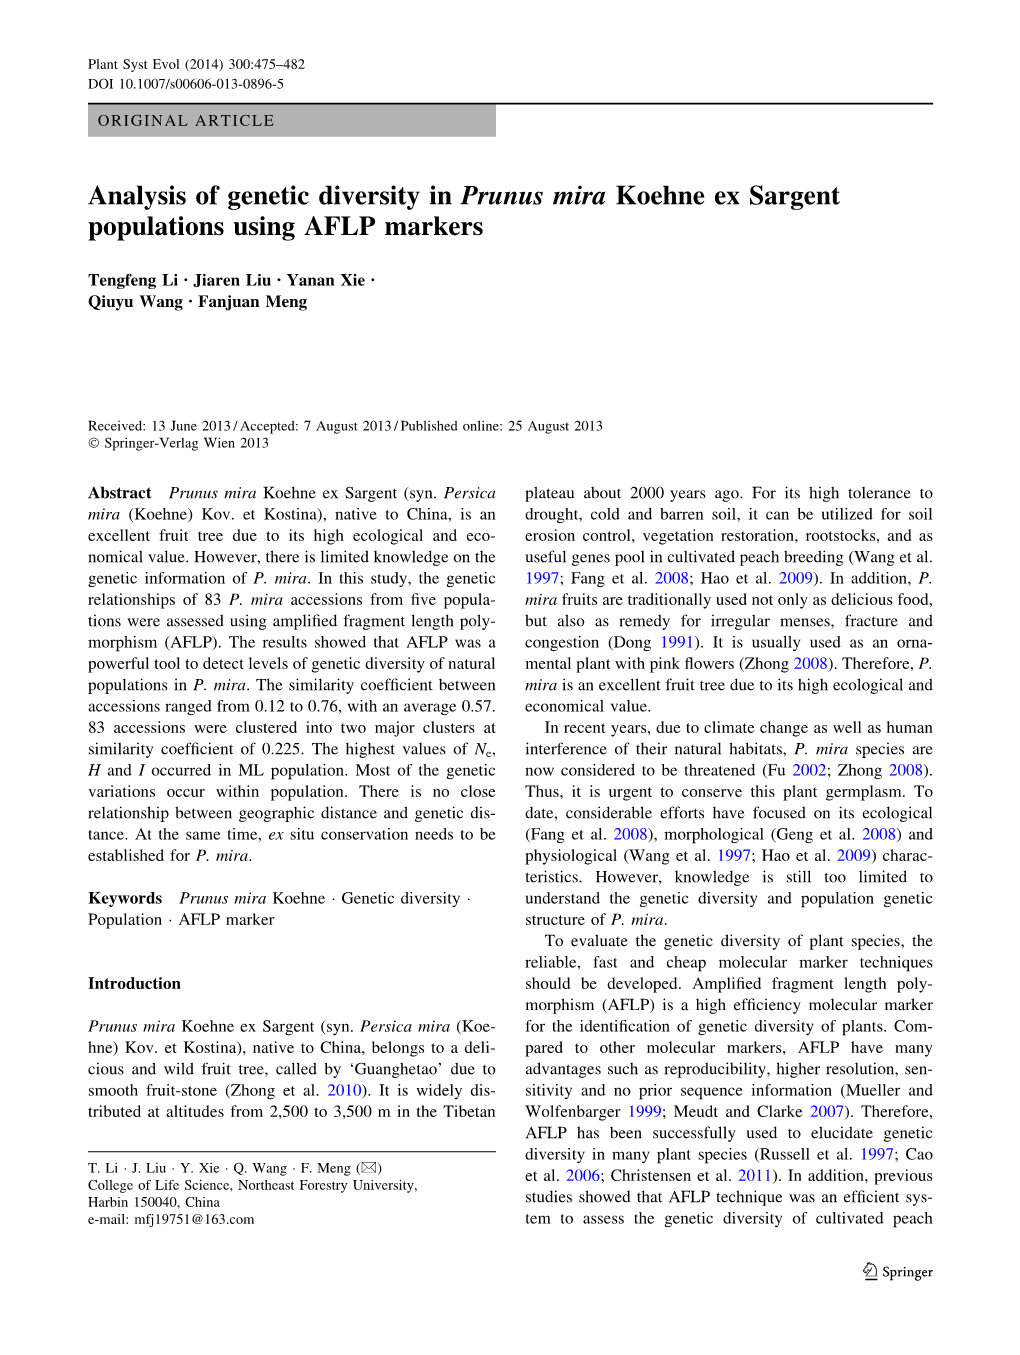 Analysis of Genetic Diversity in Prunus Mira Koehne Ex Sargent Populations Using AFLP Markers